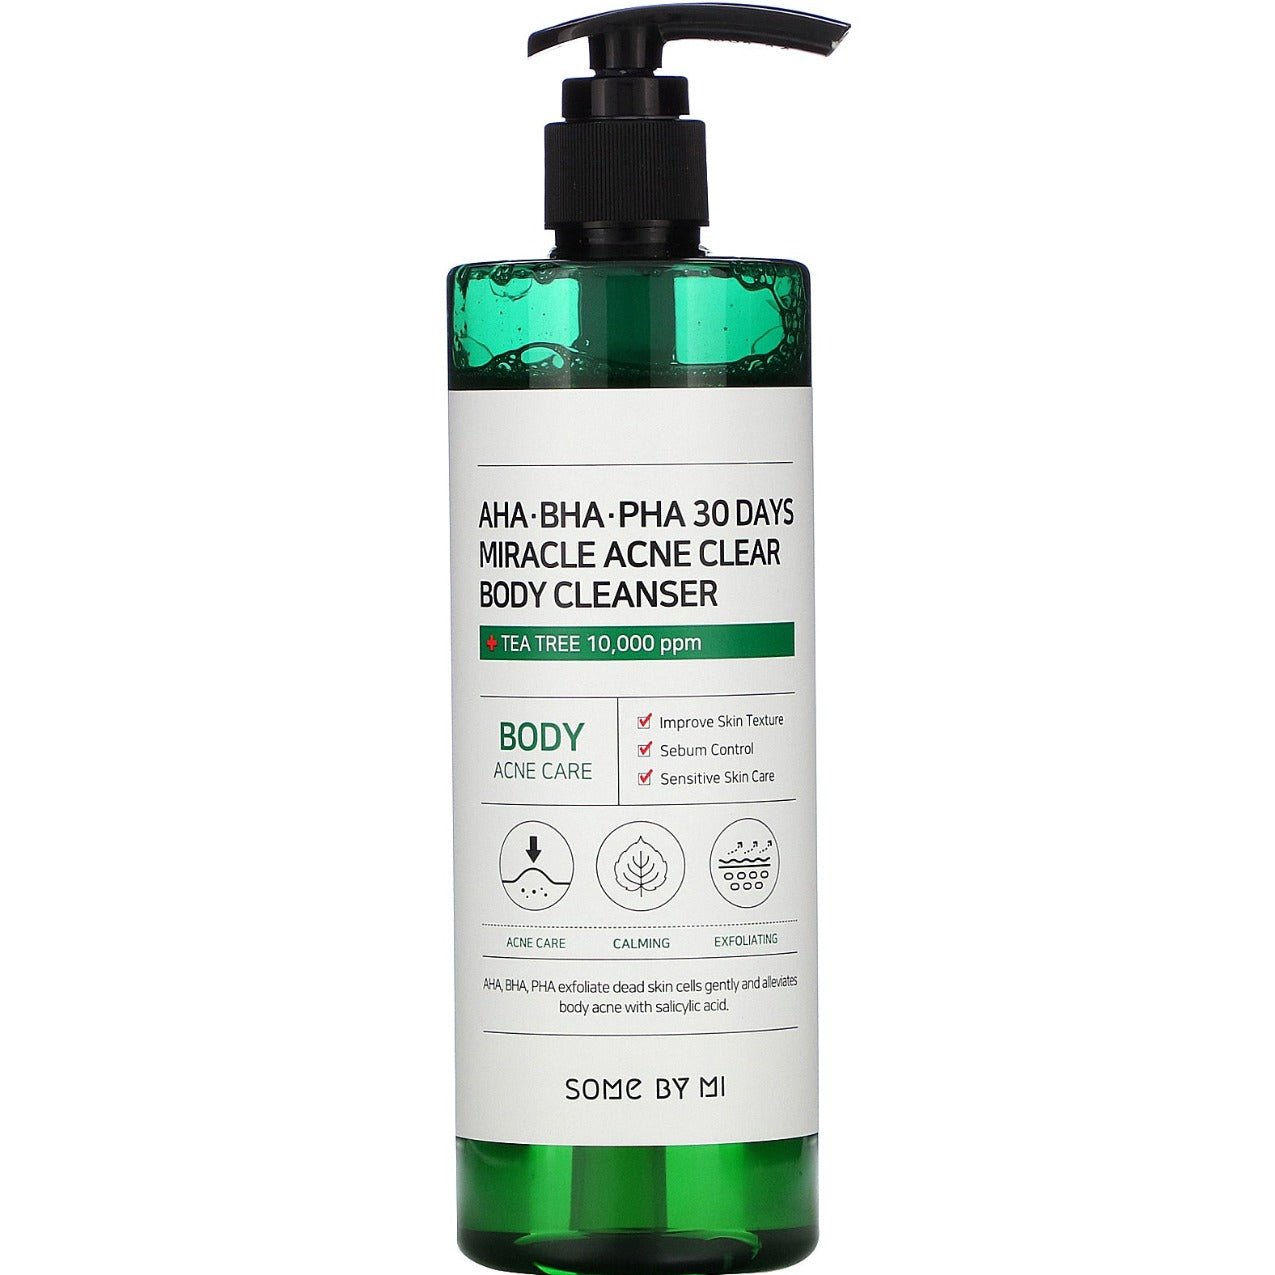 AHA.BHA.PHA 30 Days Miracle Clear Body Cleanser | Gel corporal para acne 400g - Koelleza Store